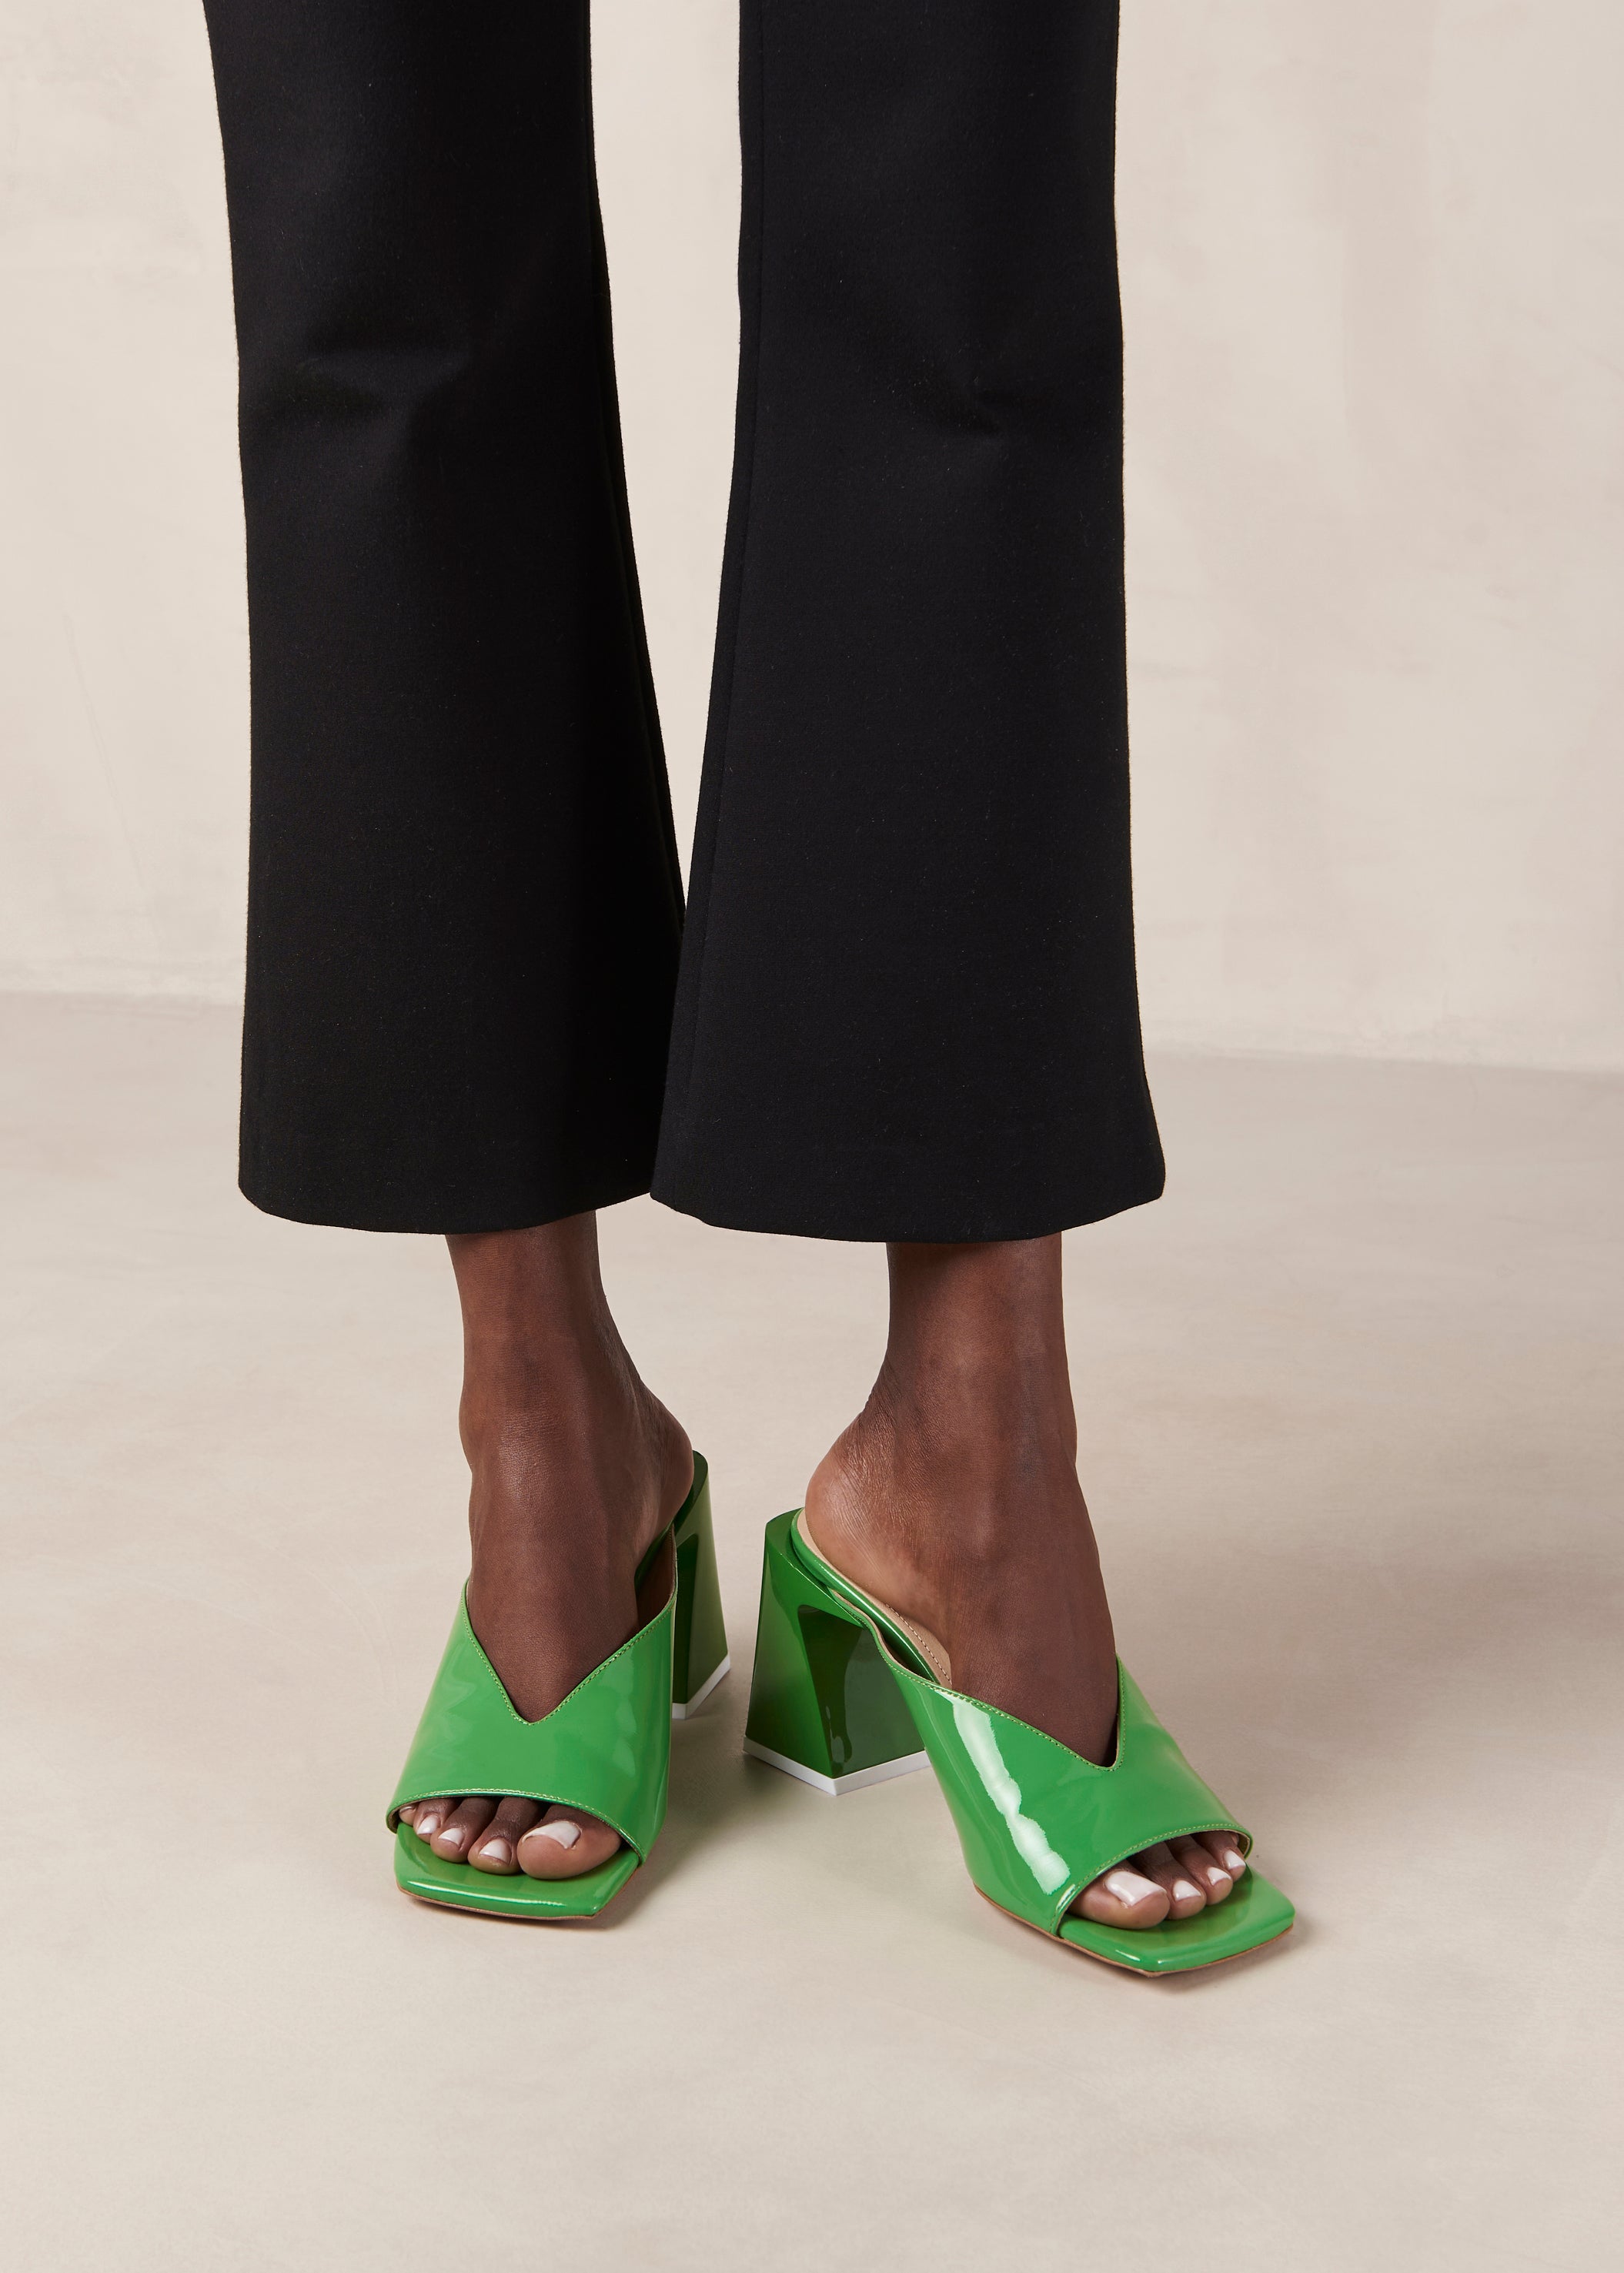 ALOHAS-OUTLET-SALE-Tasha-Green-Leather-Sandals-Sandalen-ARCHIVE-COLLECTION.jpg